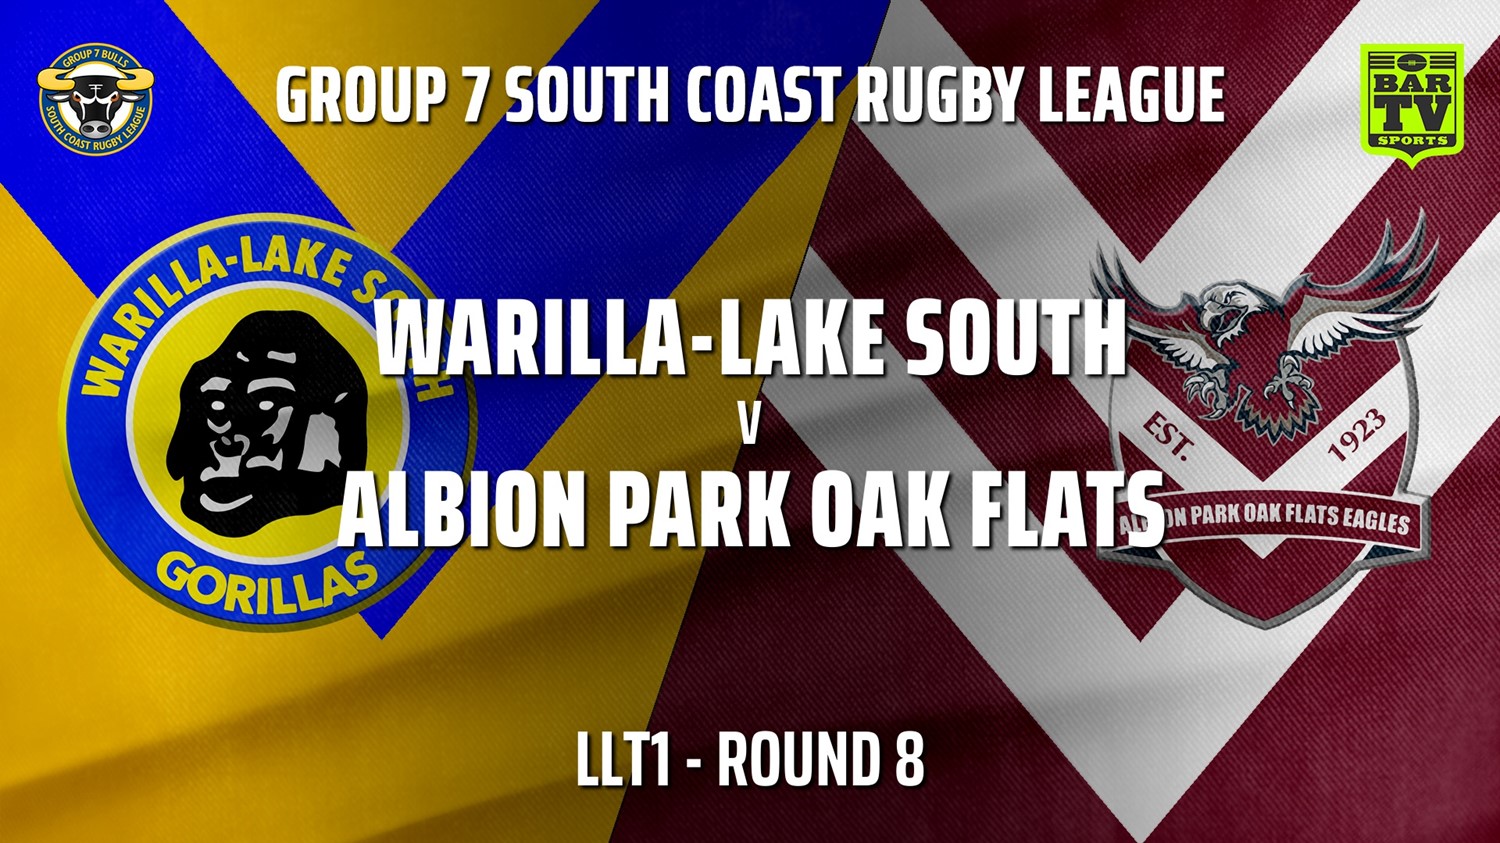 210606-Group 7 RL Round 8 - LLT1 - Warilla-Lake South v Albion Park Oak Flats Slate Image